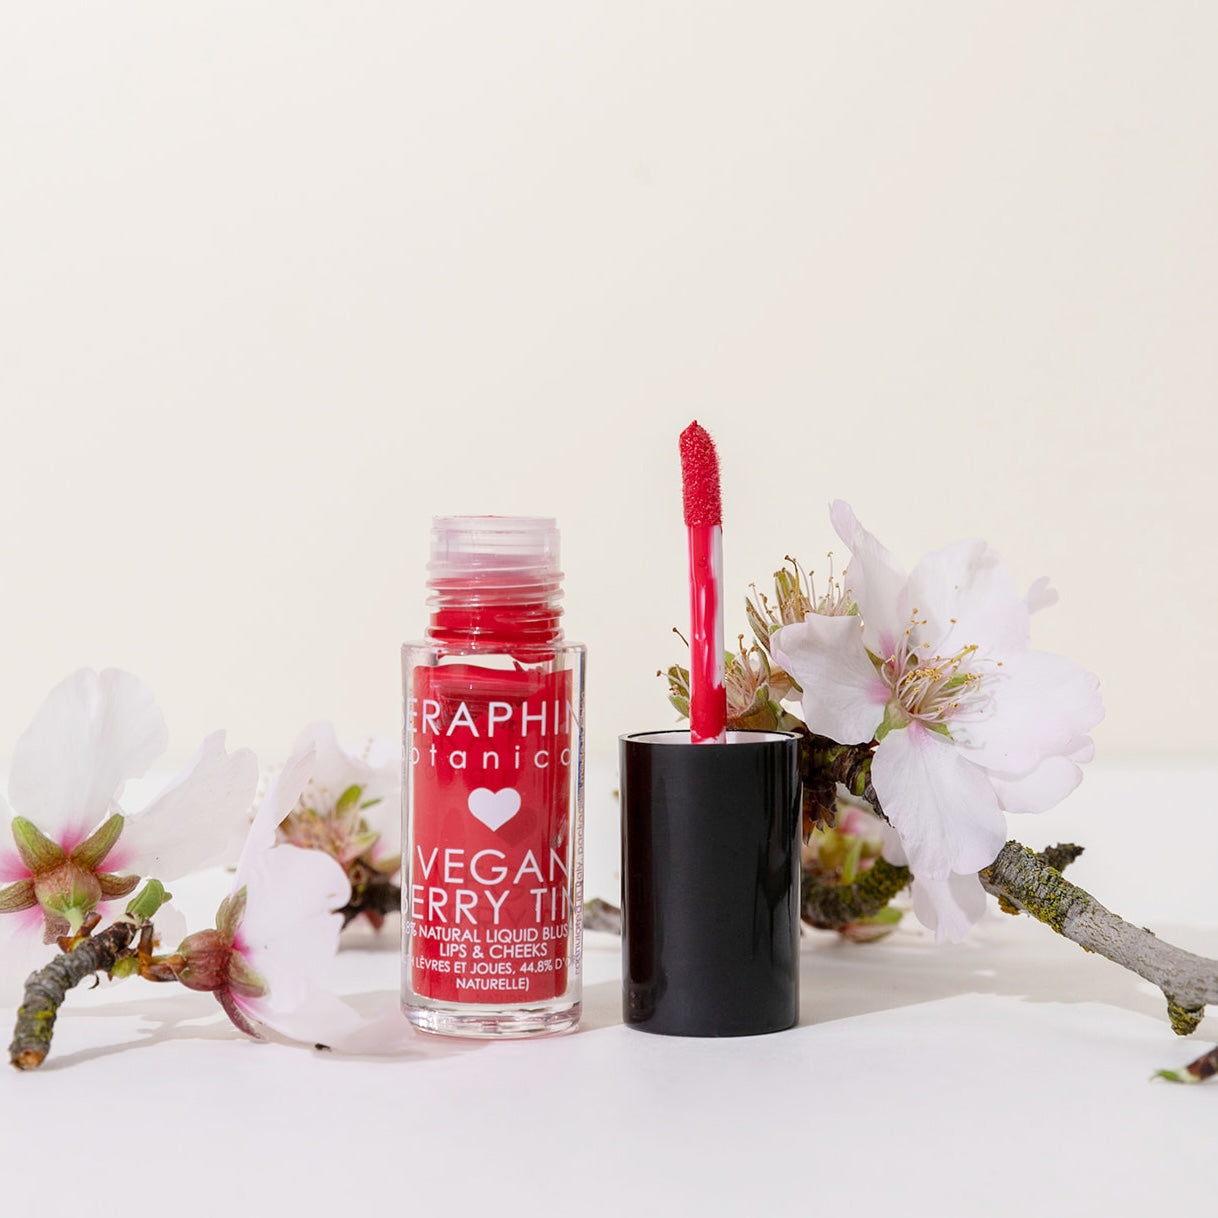 Vegan Berry Tint - 44.8% Natural Liquid Blush for Lips & Cheeks